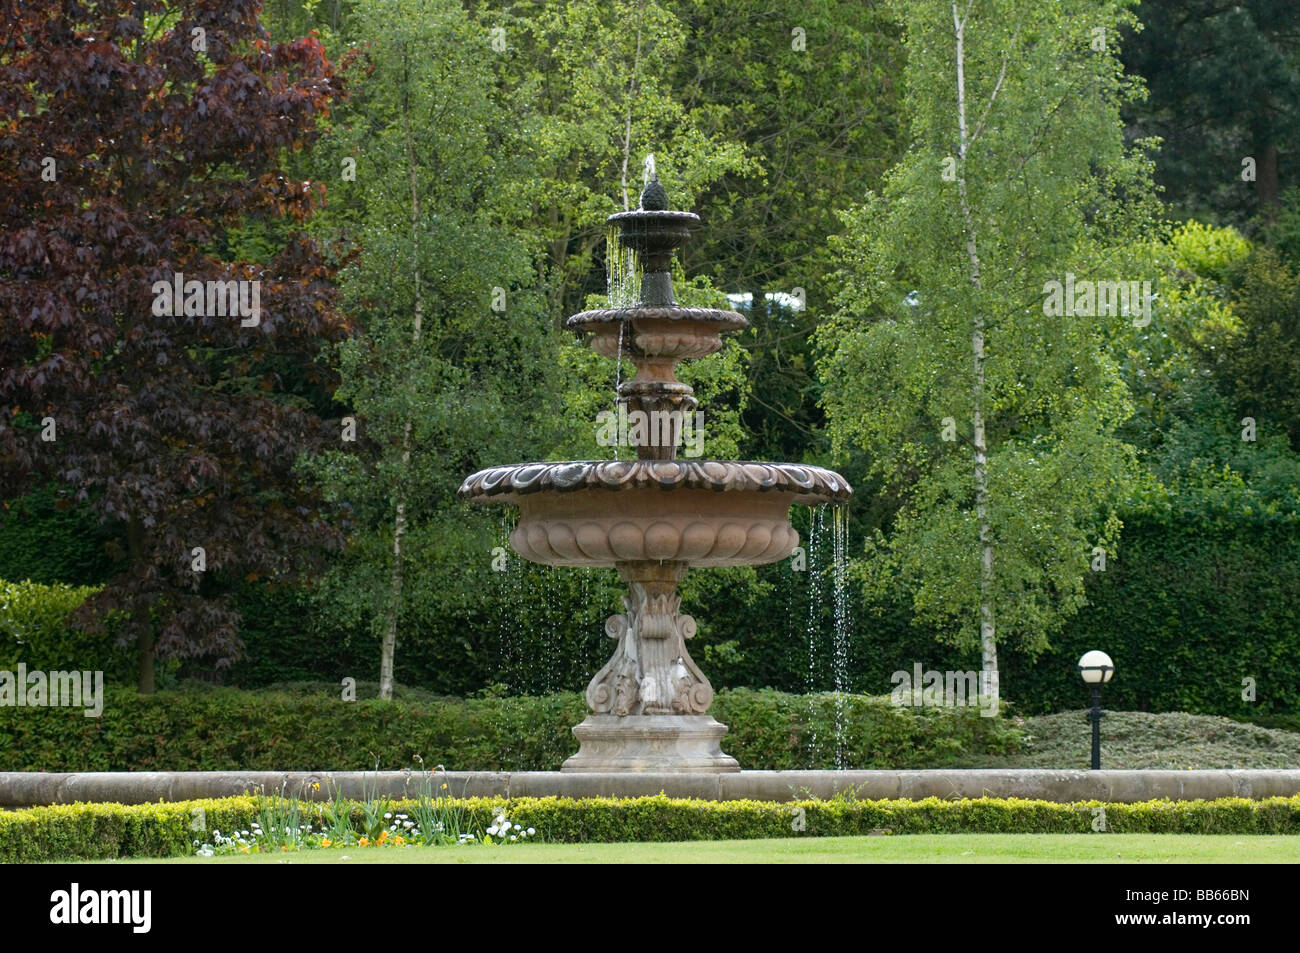 Fontana ornamentali fontane giardini giardino acqua Foto Stock